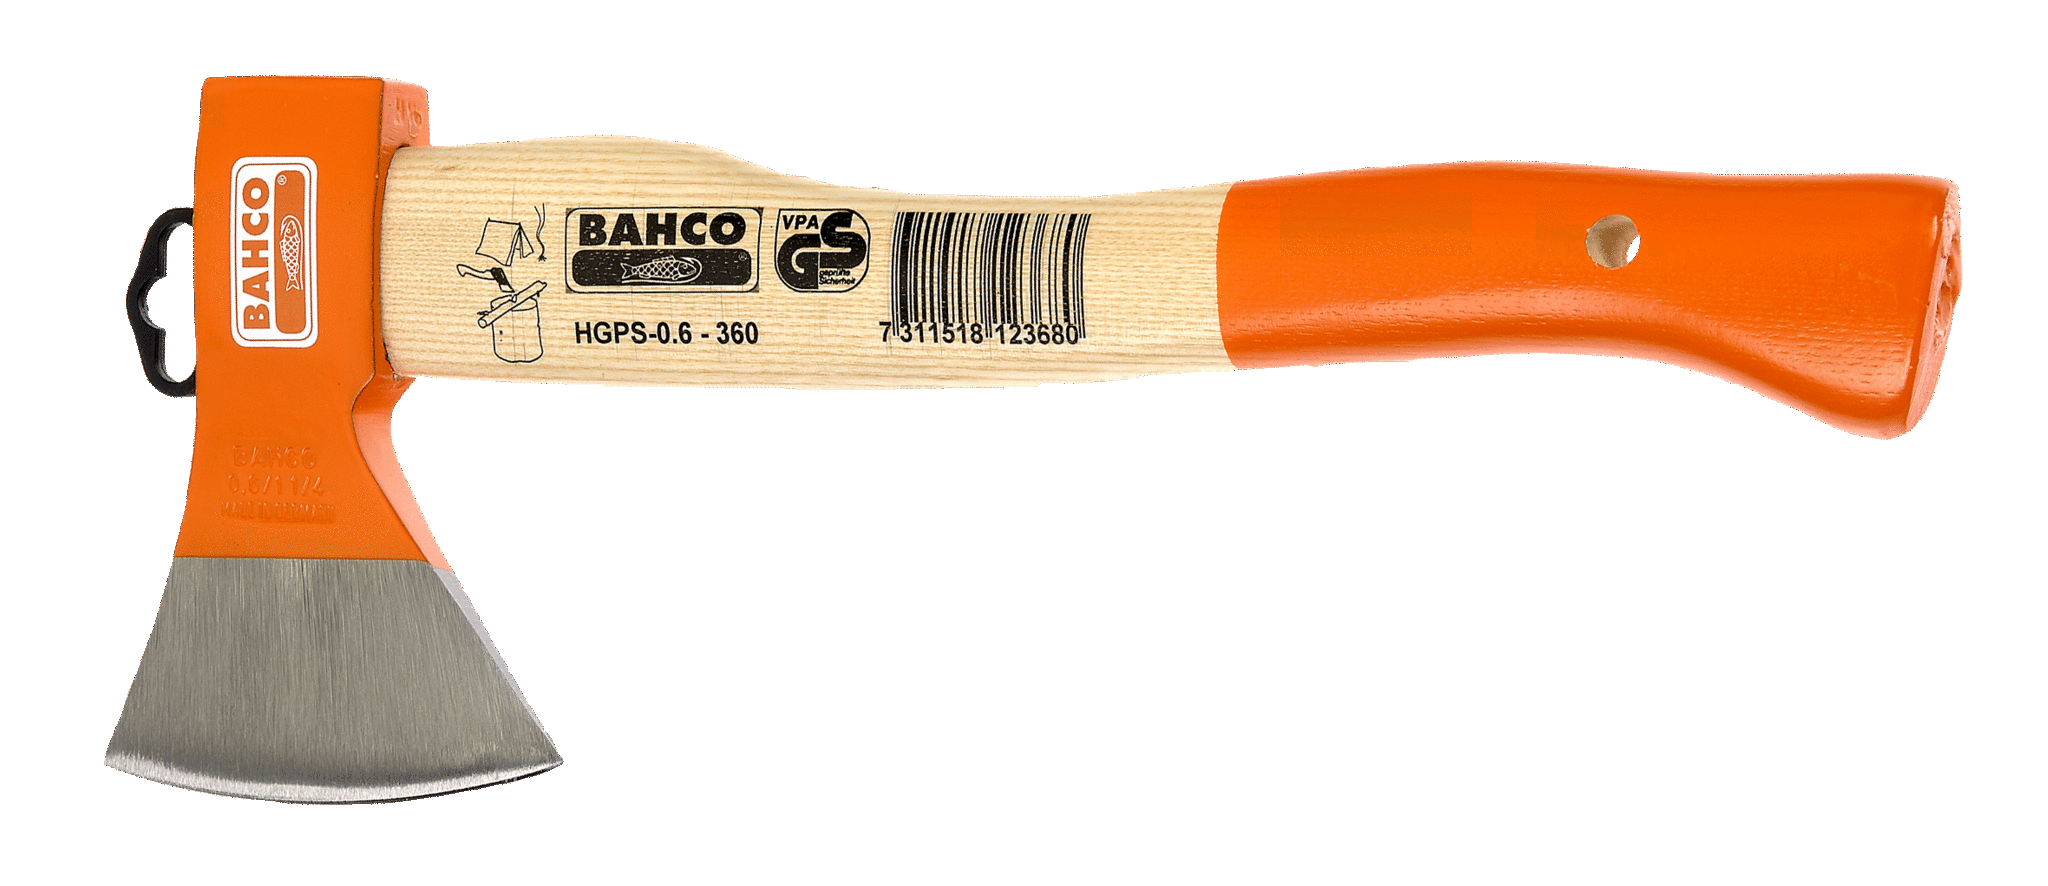 Bahco HGPS-1.0-400